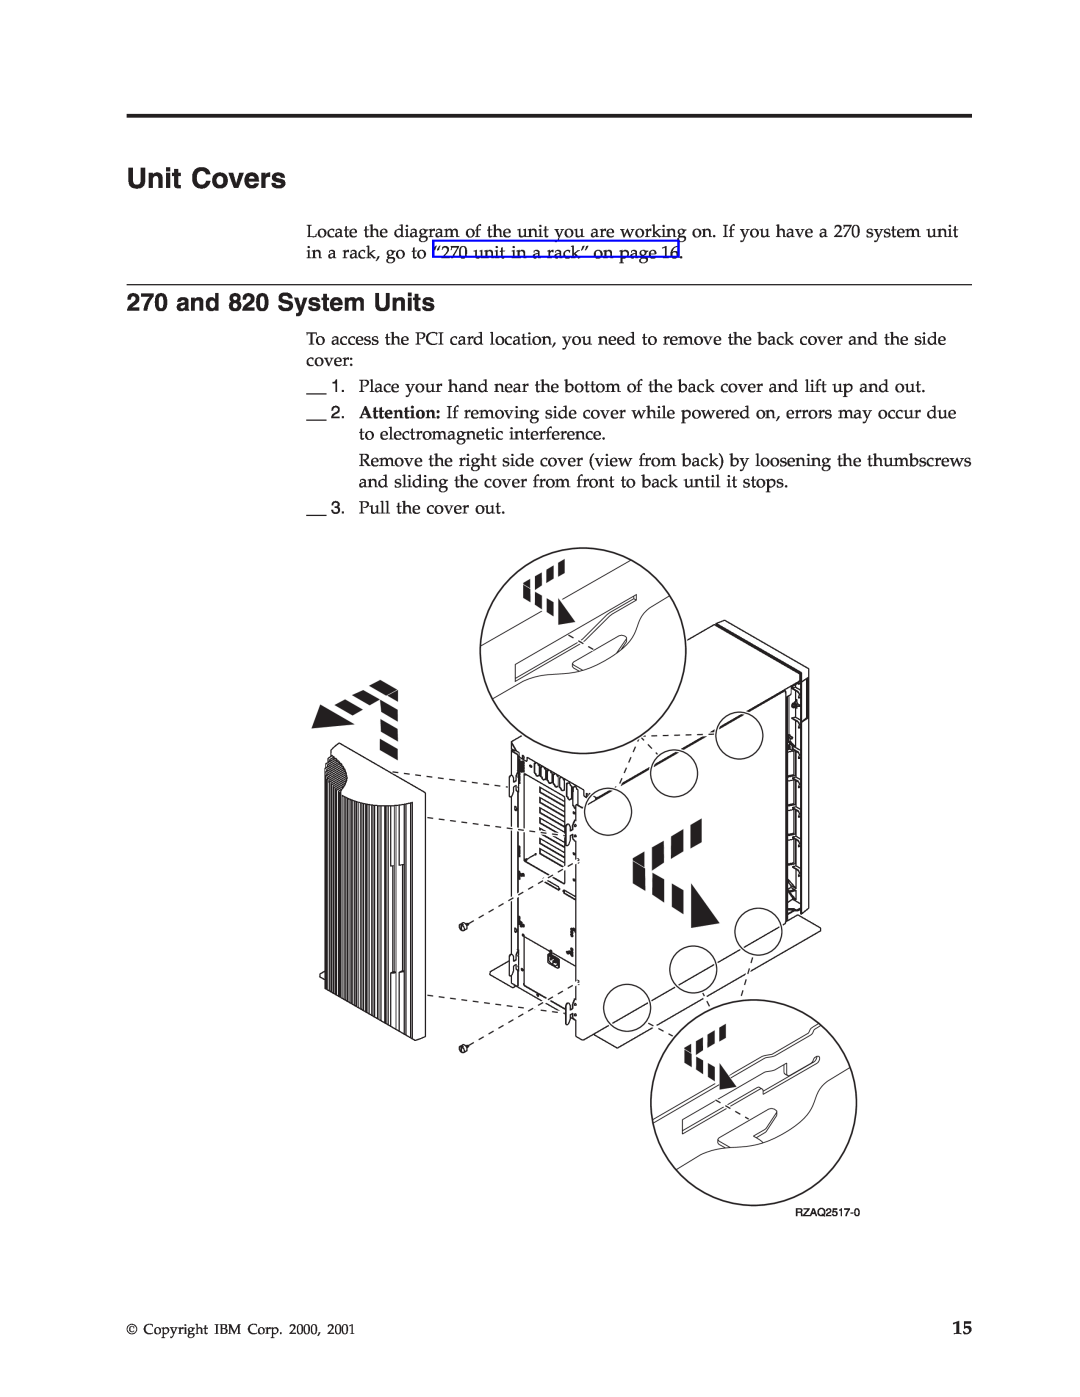 IBM SENG-3002-01 manual Unit Covers, and 820 System Units 